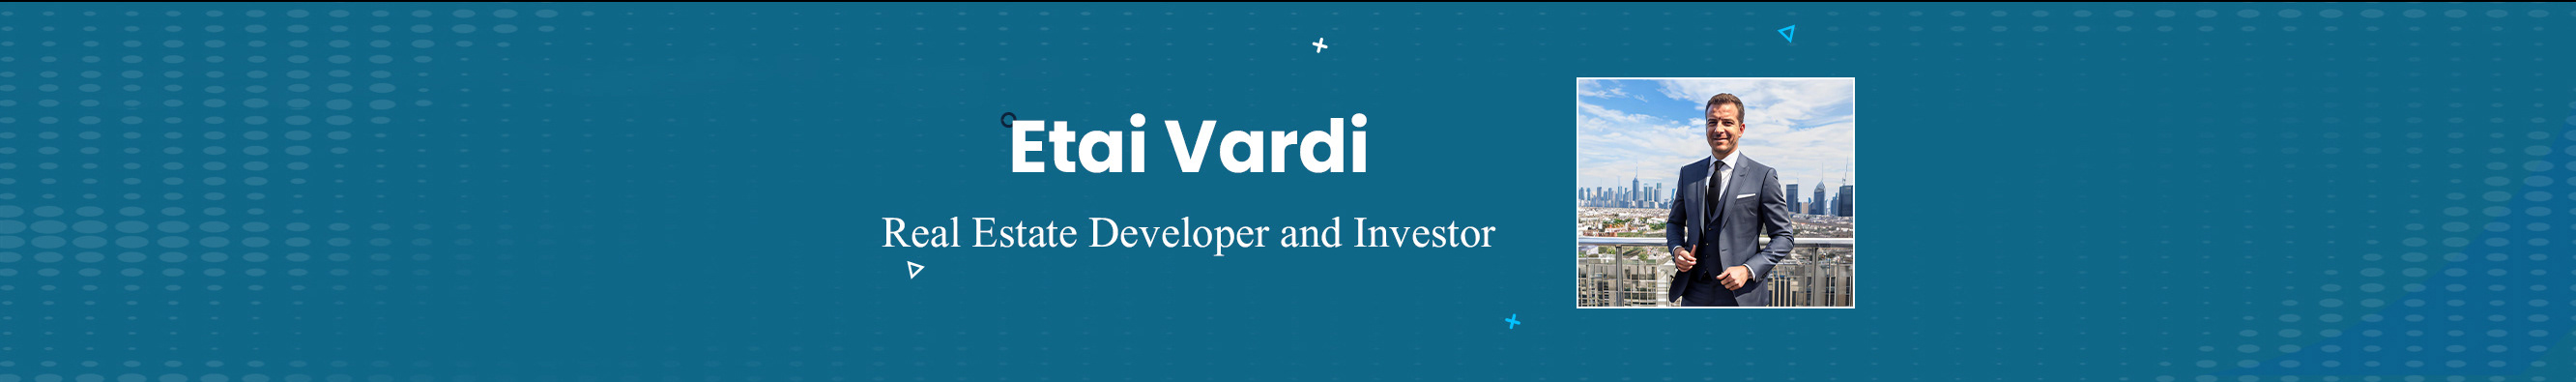 Etai Vardi's profile banner